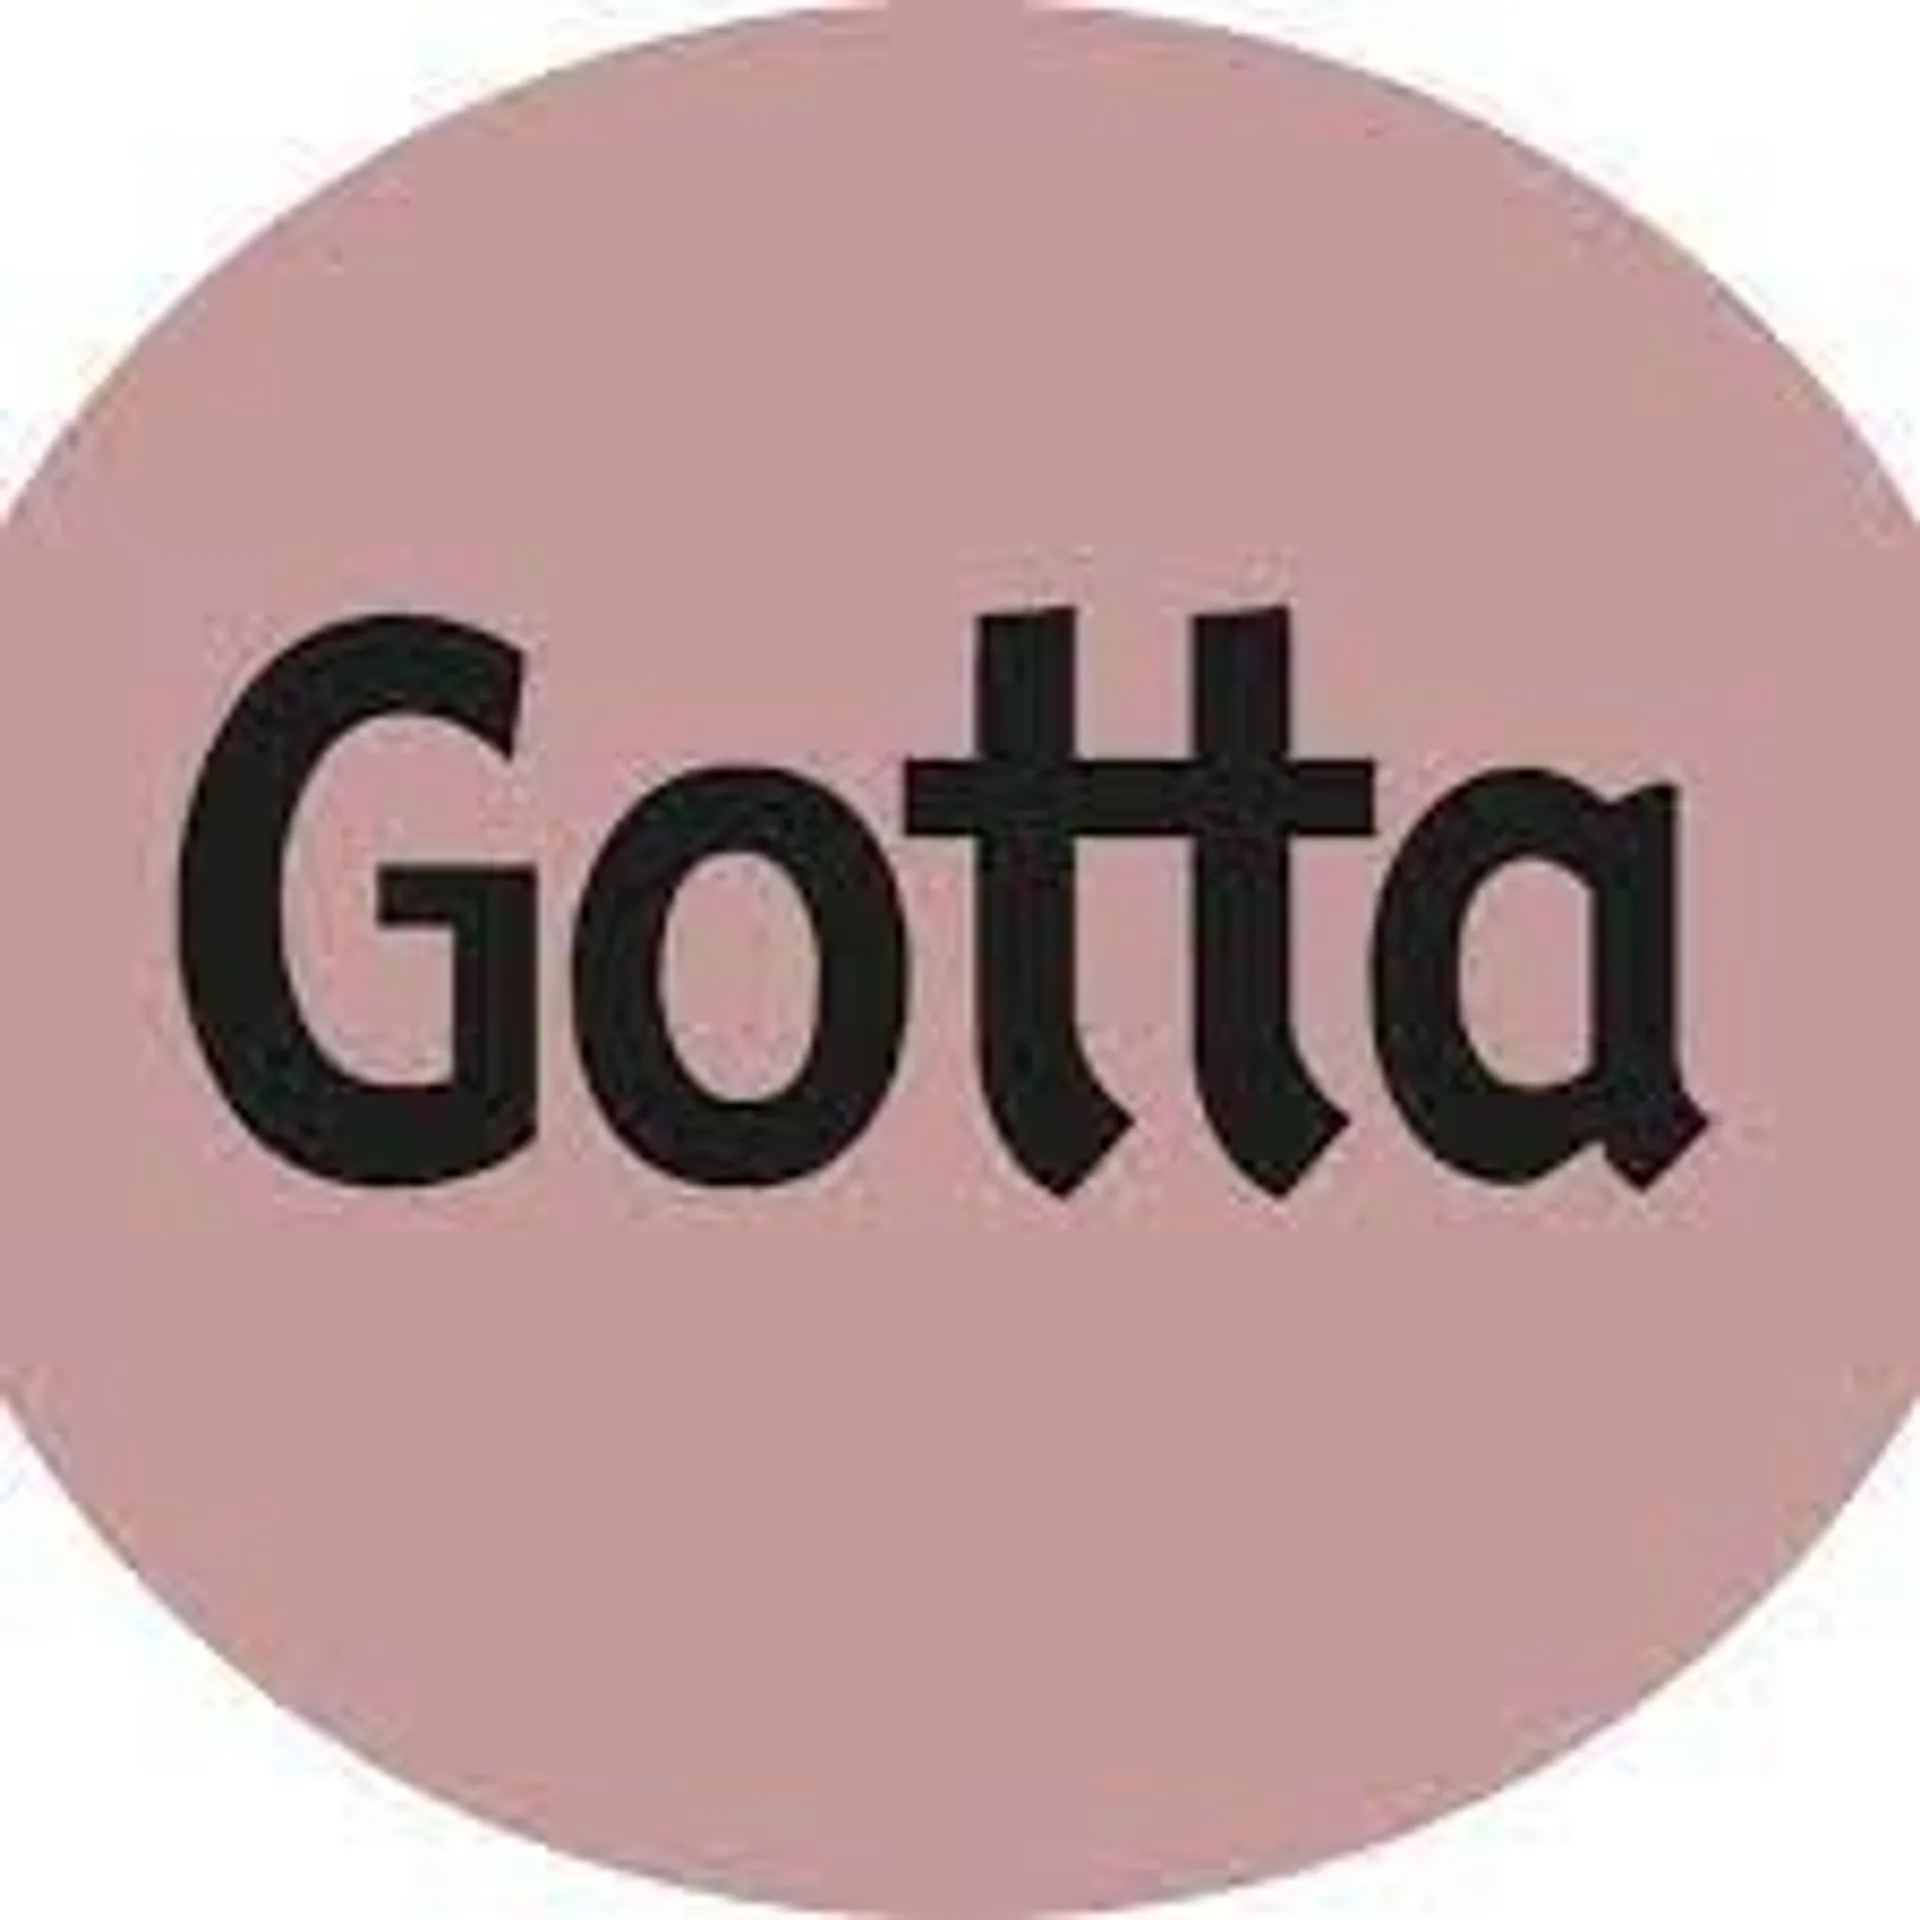 GOTTA logo